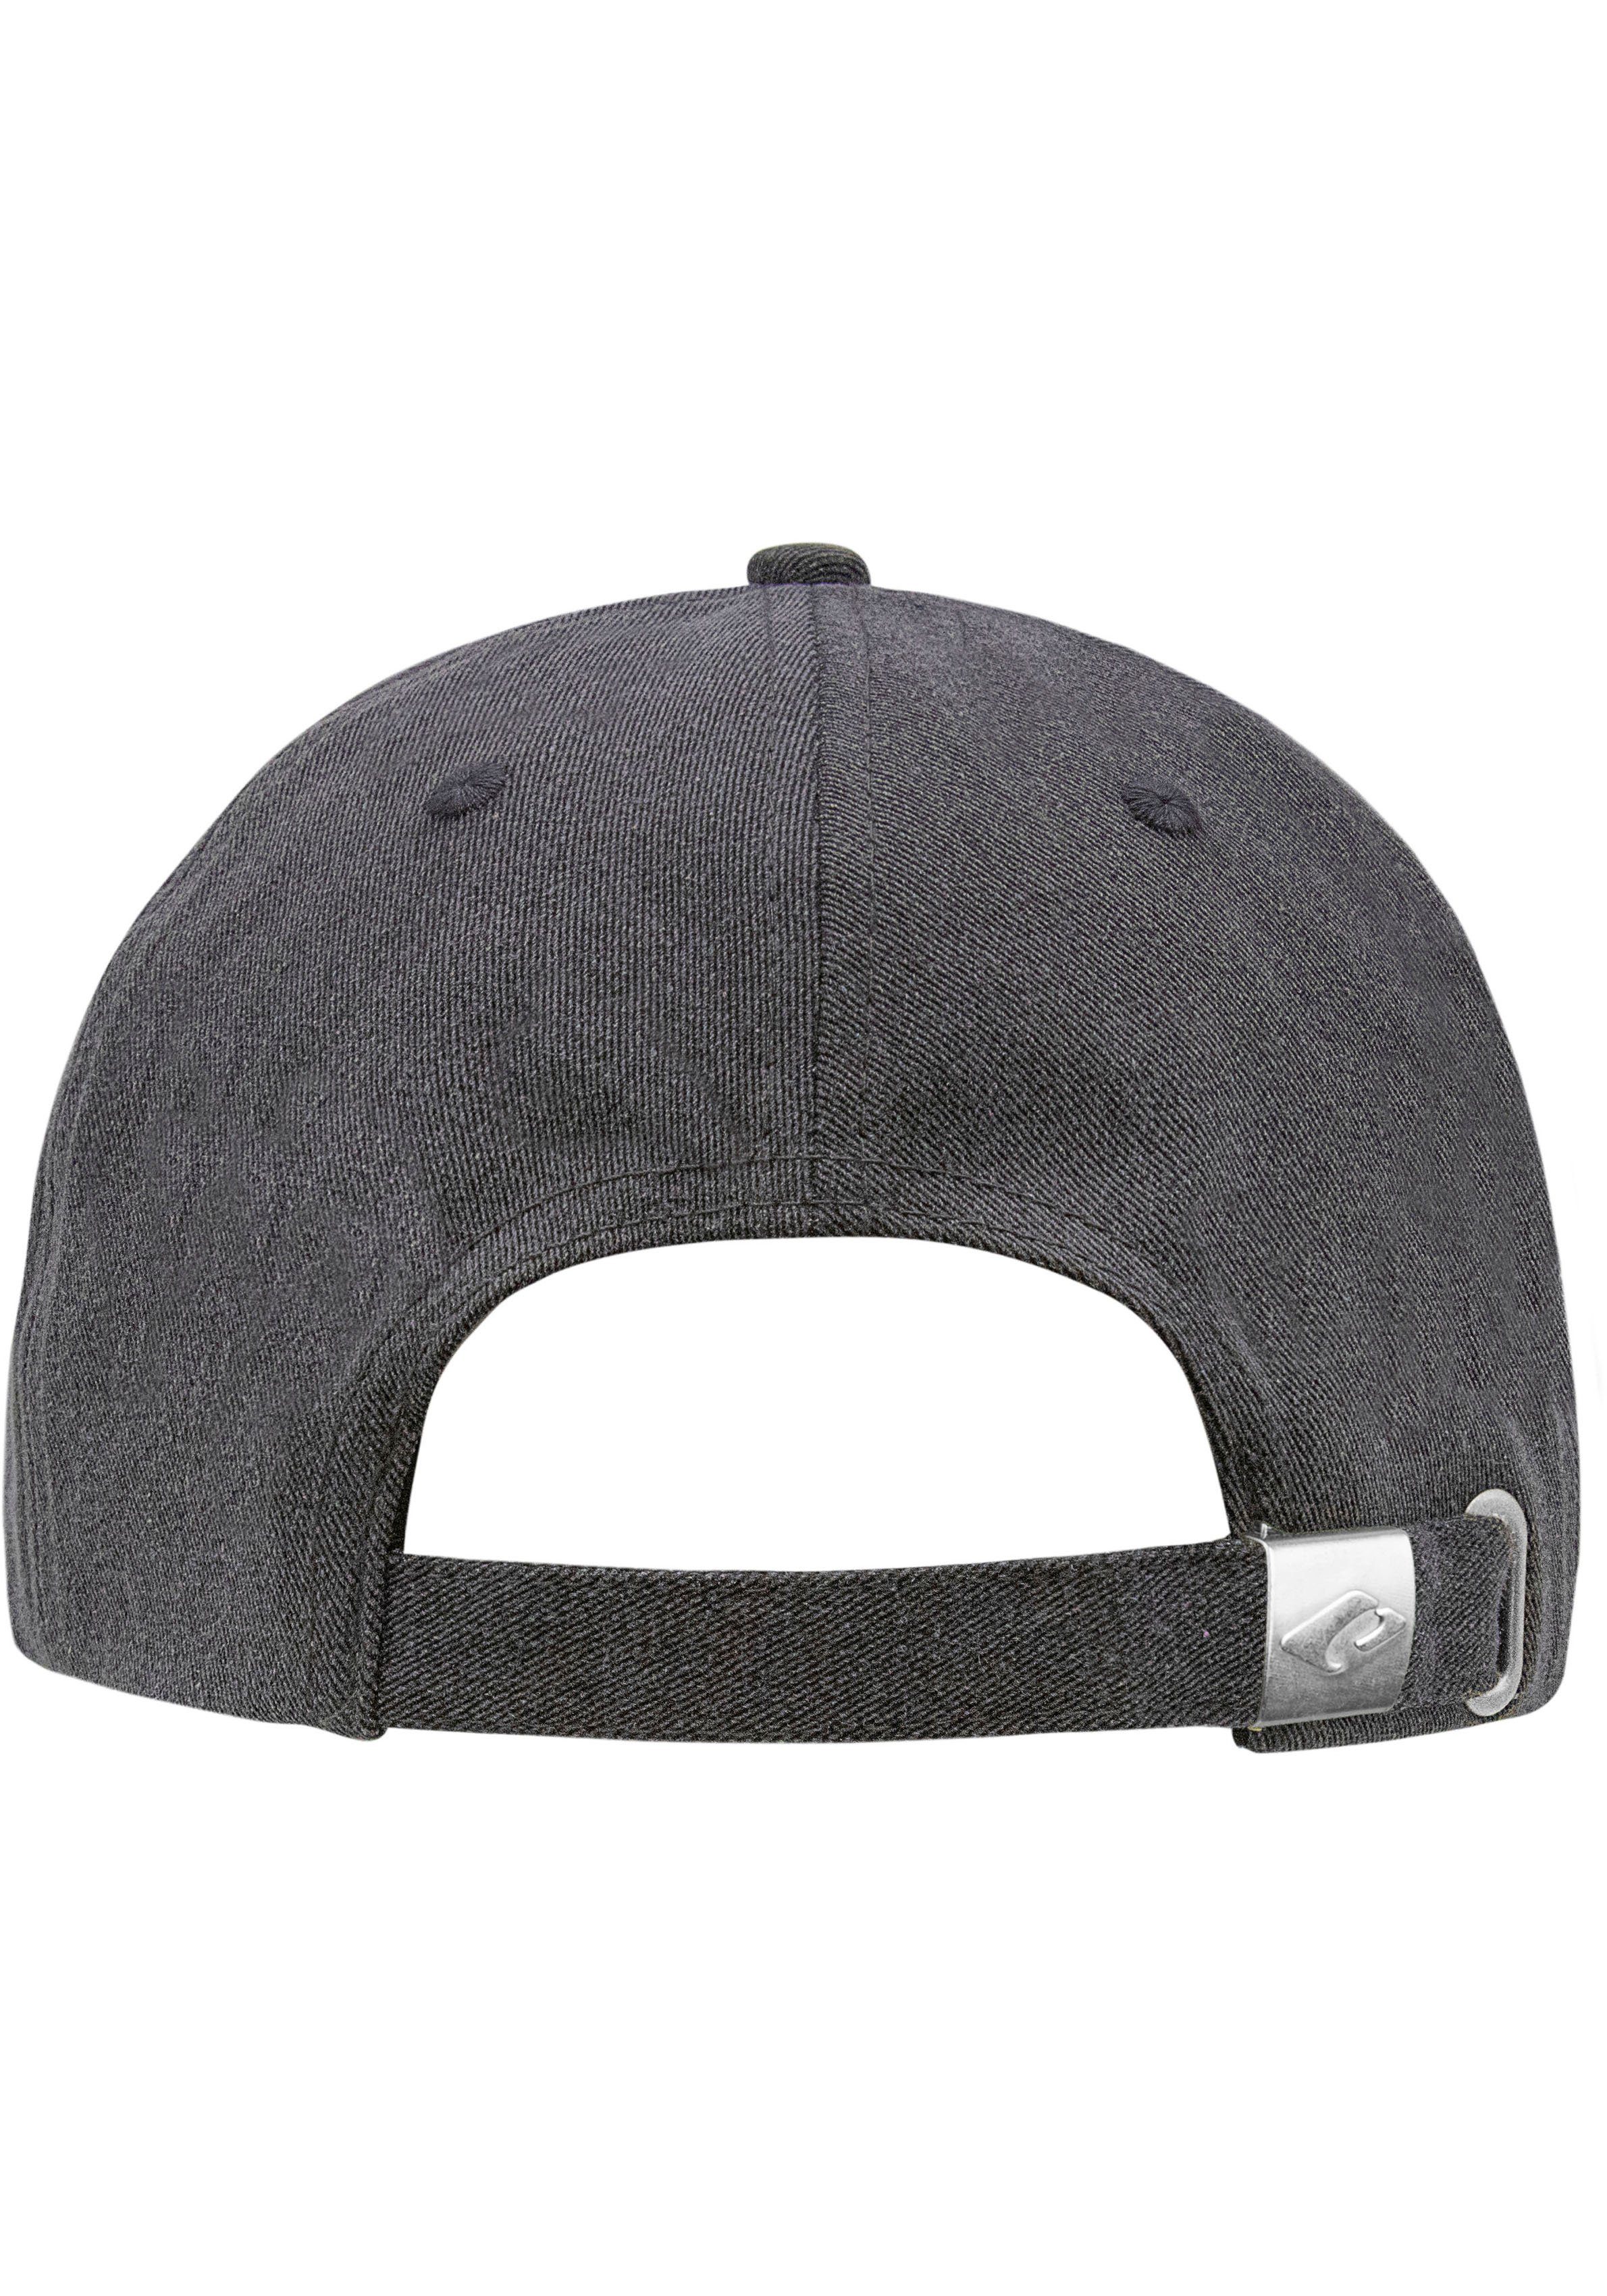 dunkelgrau Baseball Cap Arklow chillouts Hat